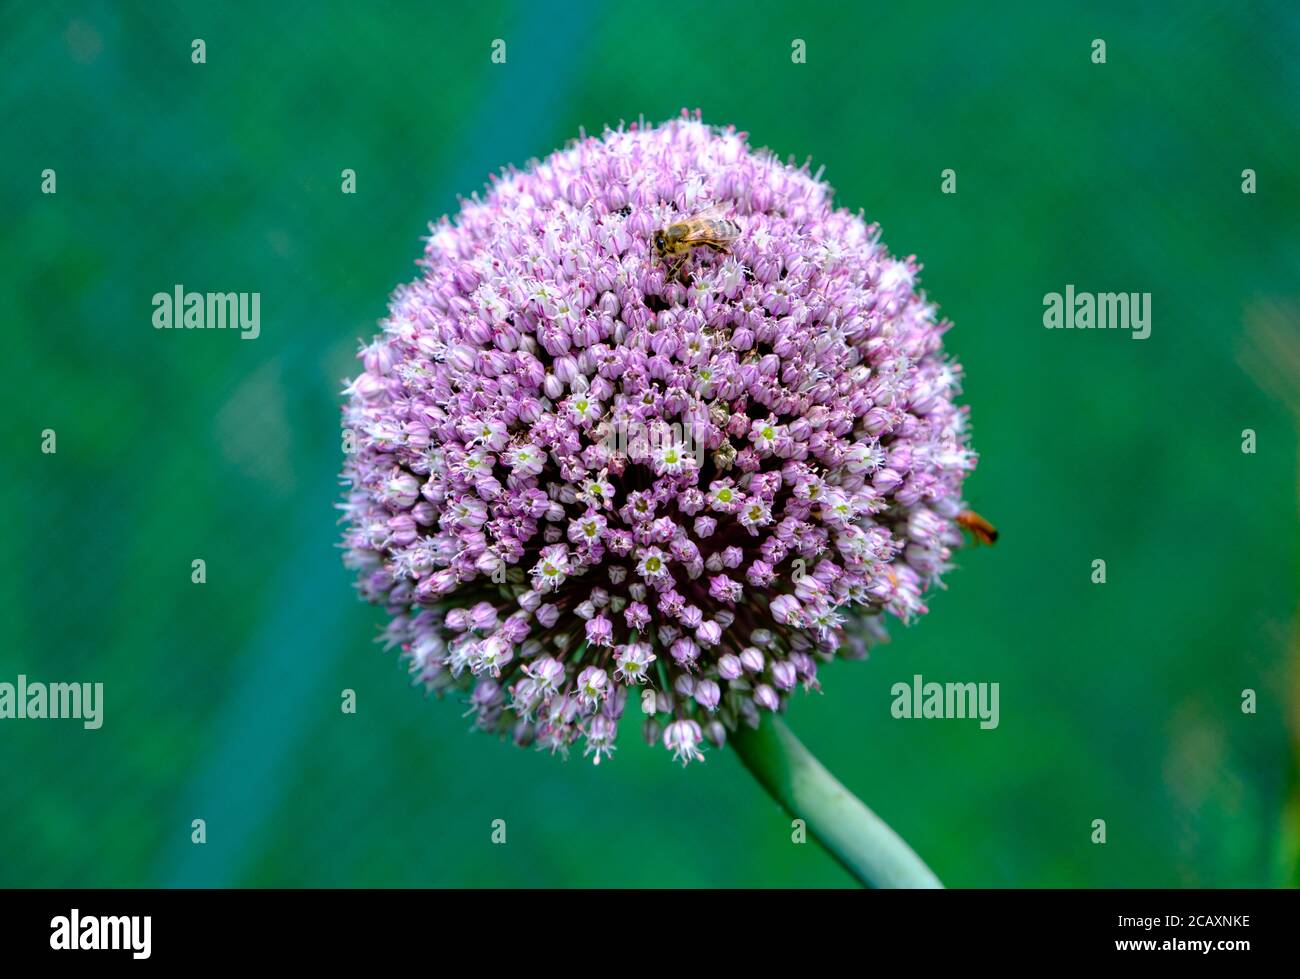 Flower of leek (Allium porrum) with honeybee Stock Photo